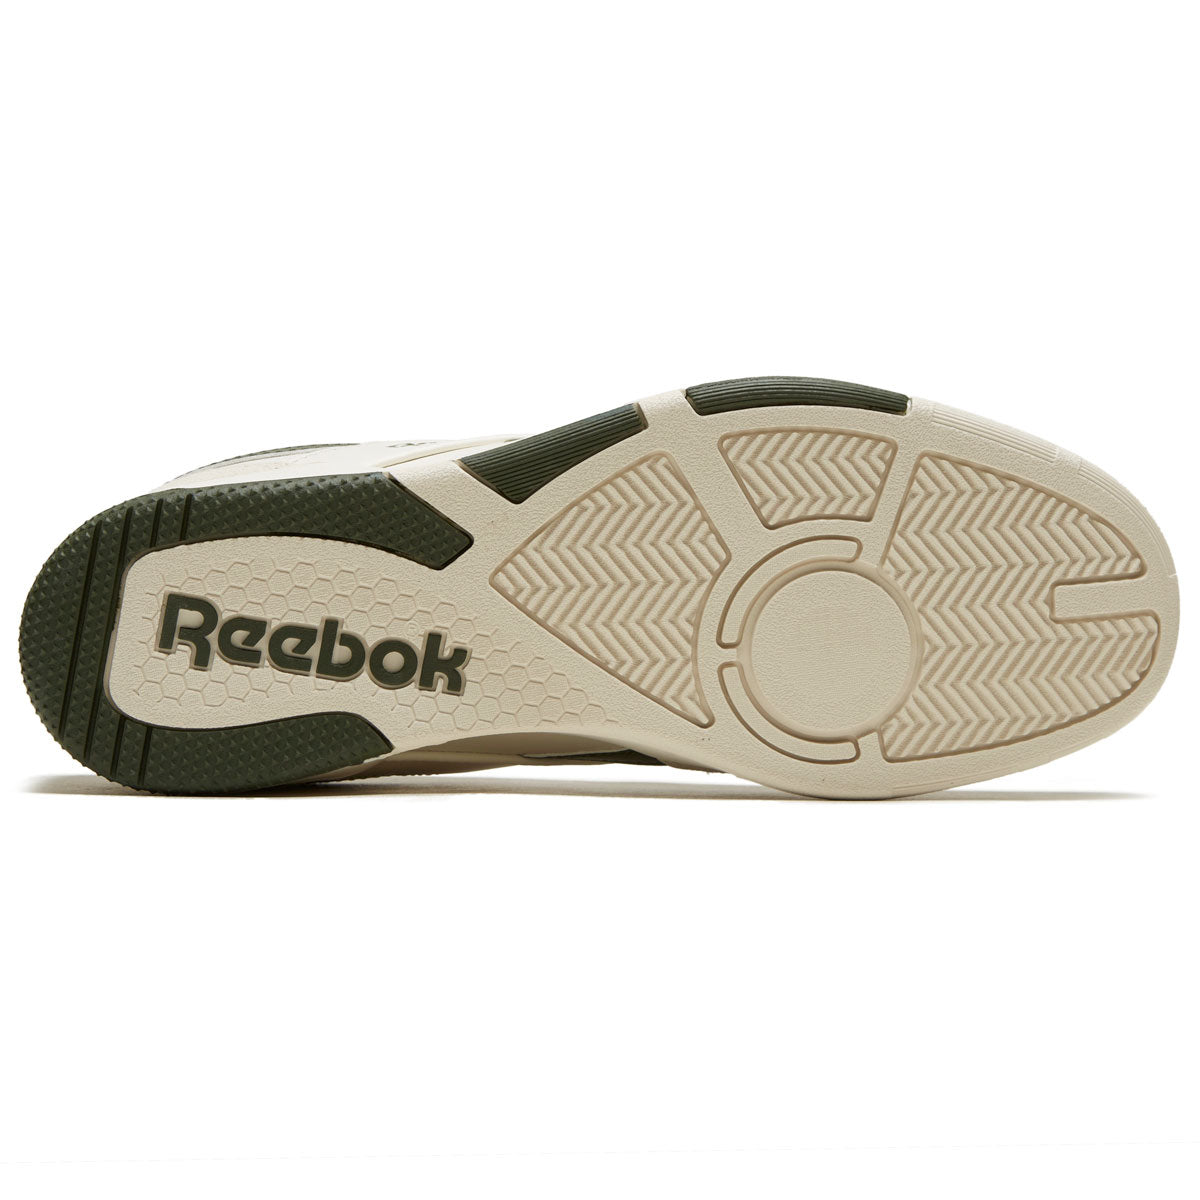 Reebok BB 4000 II Shoes - Chalk/Grey/Vintage Chalk image 4